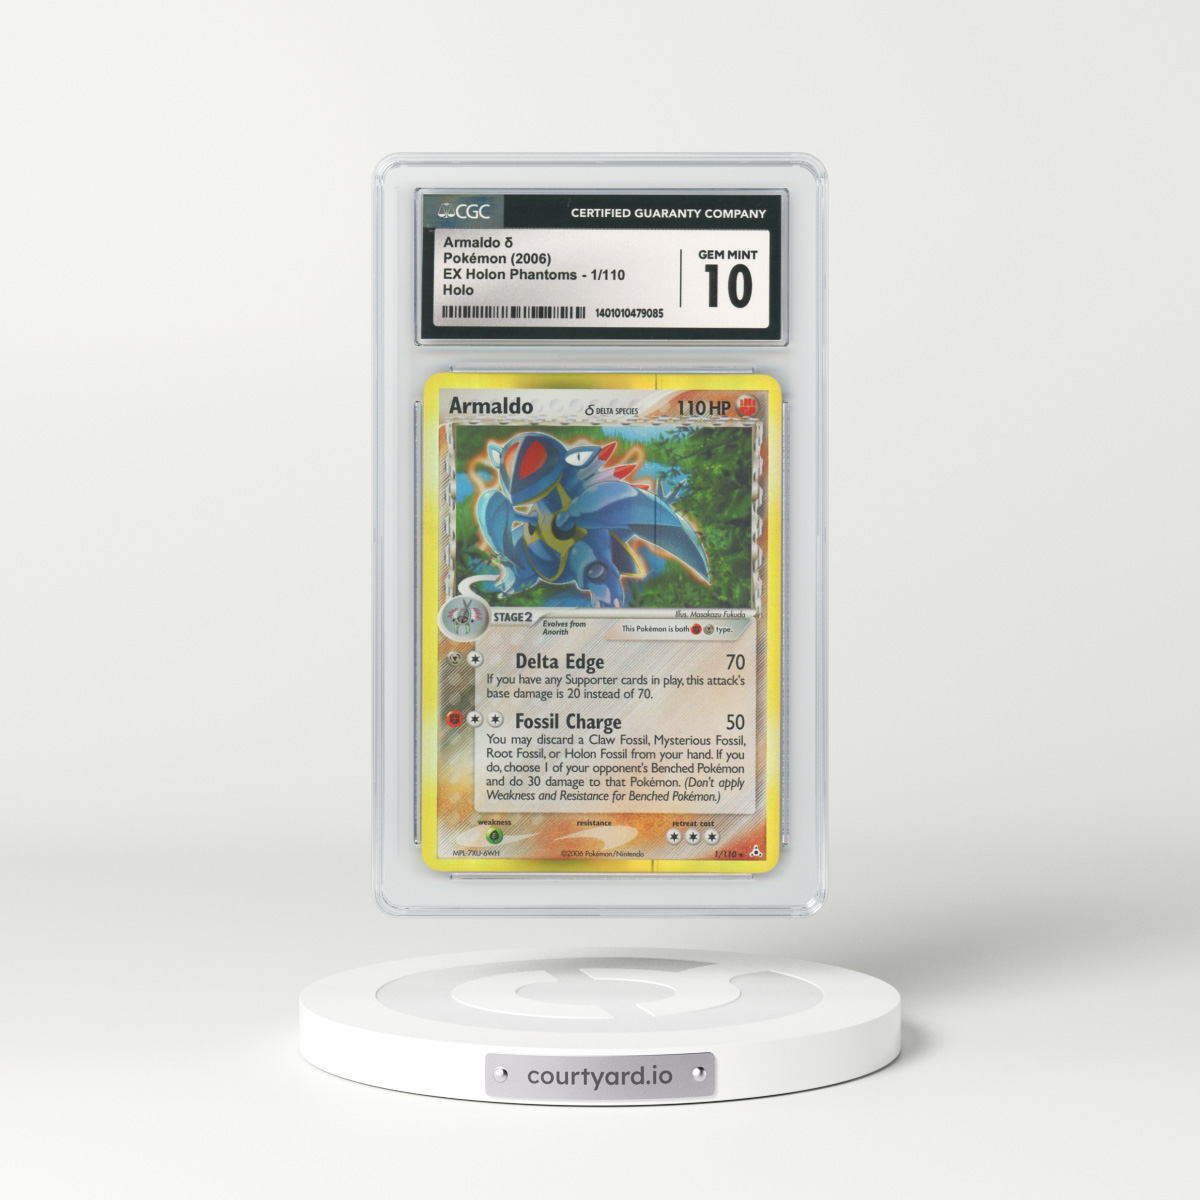 Aerodactyl (delta species) - EX Holon Phantoms #35 Pokemon Card